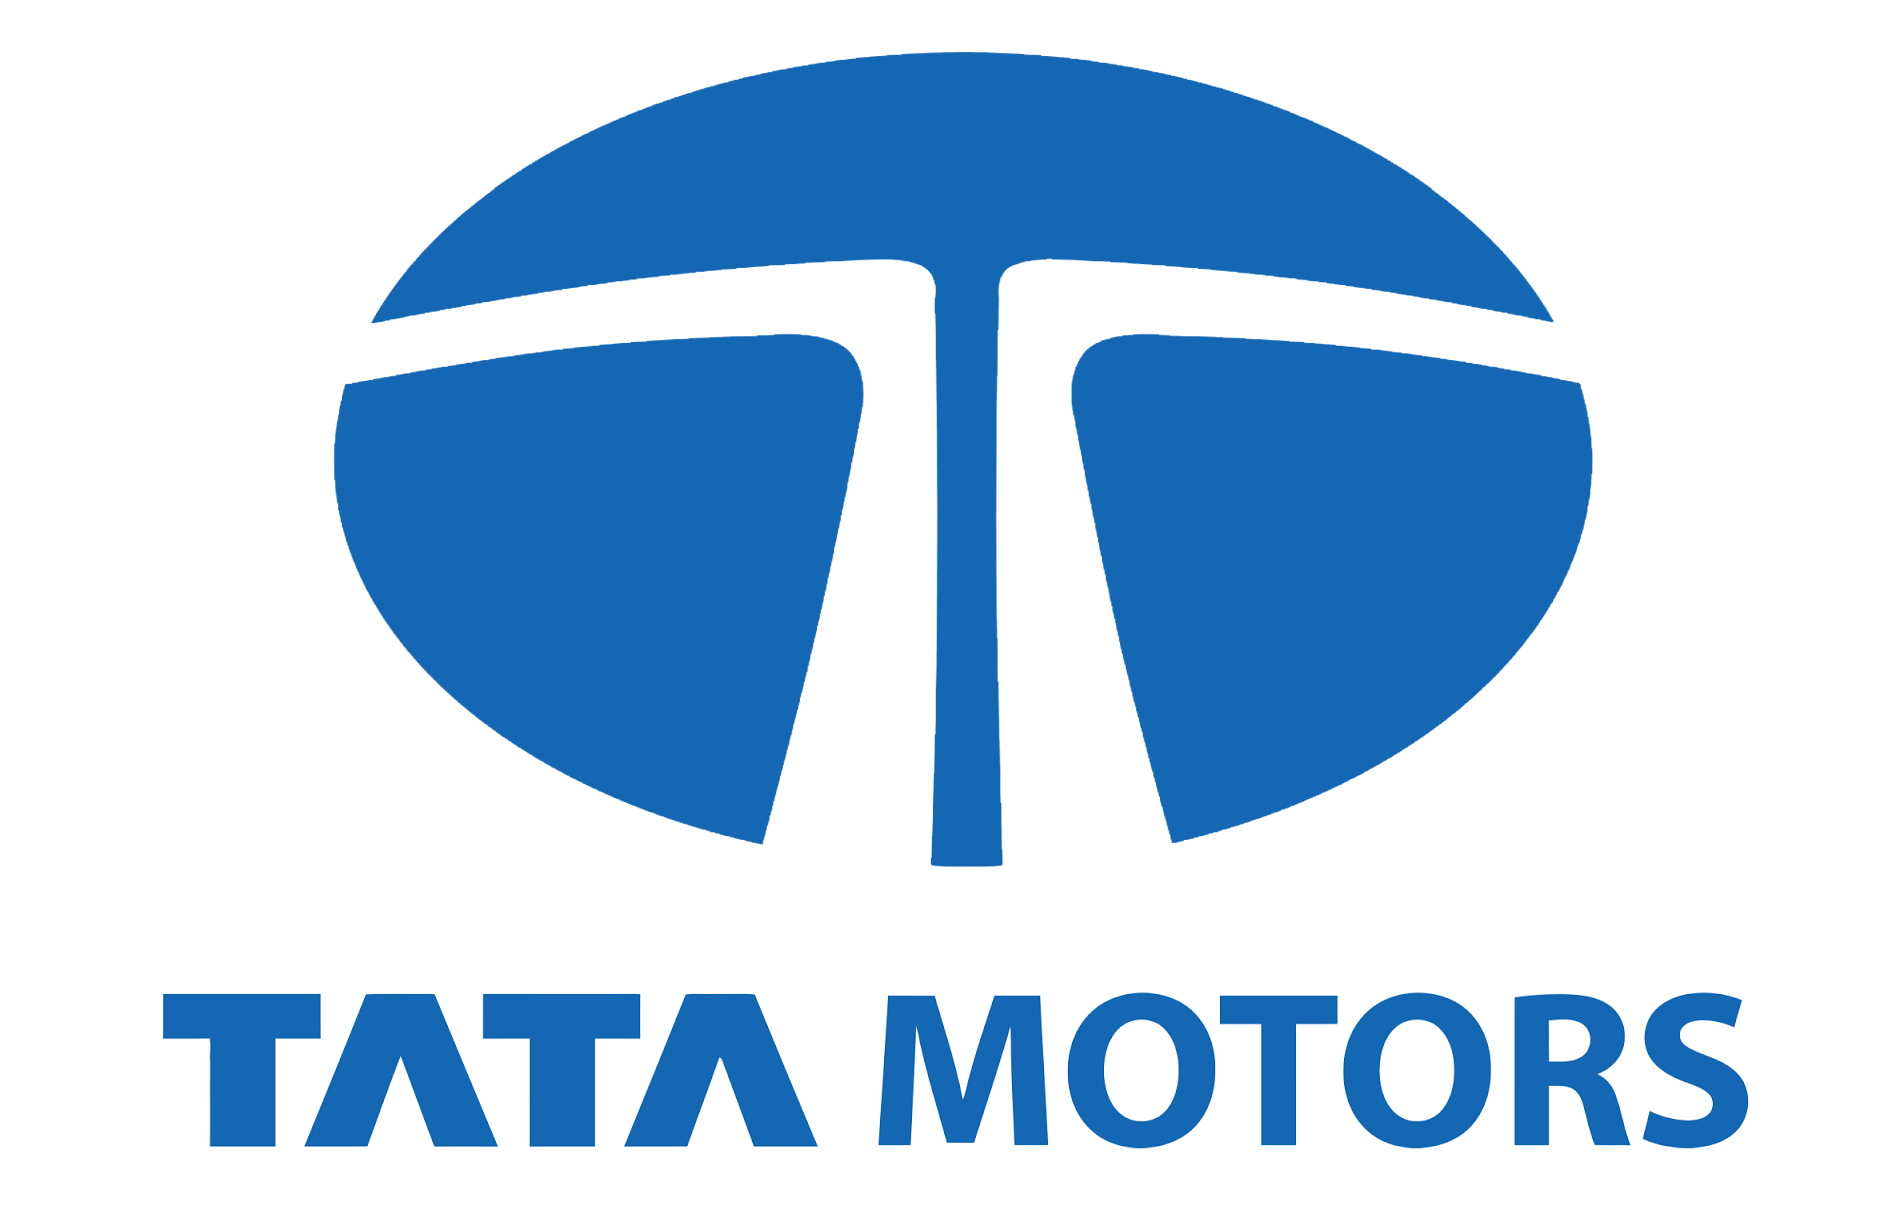 Tata Motors Cars Showroom - KVR Dream Vehicles|Show Room|Automotive